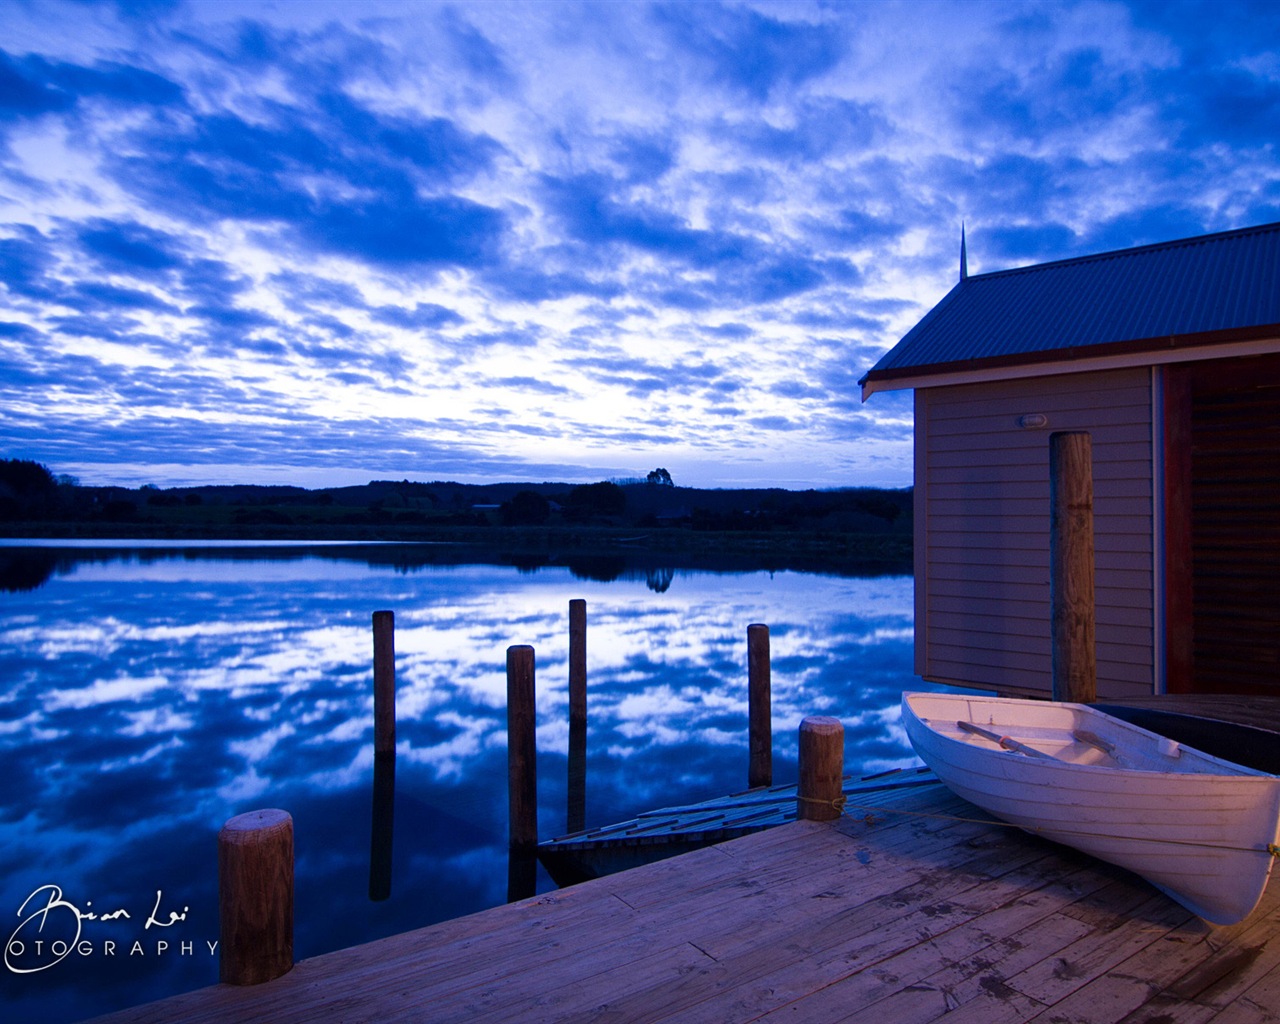 New Zealand North Island beautiful scenery, Windows 8 theme wallpapers #1 - 1280x1024